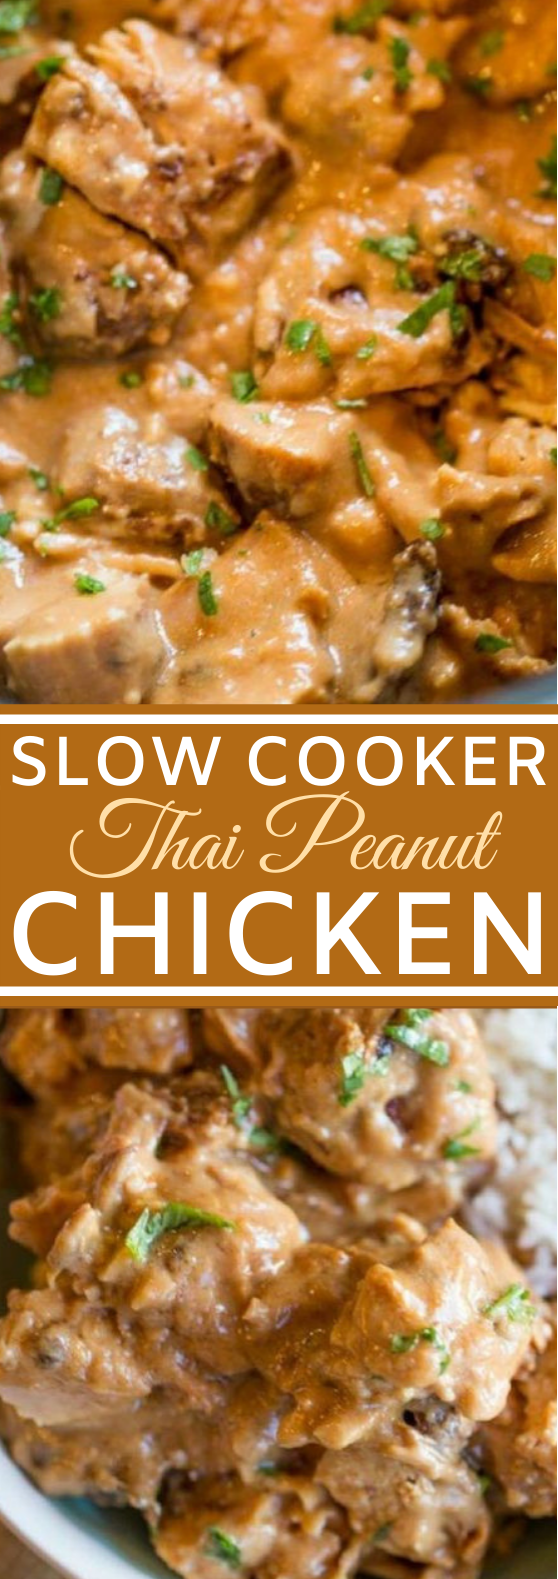 Slow Cooker Thai Peanut Chicken #dinner #chicken #recipes #slowcooker #weeknight